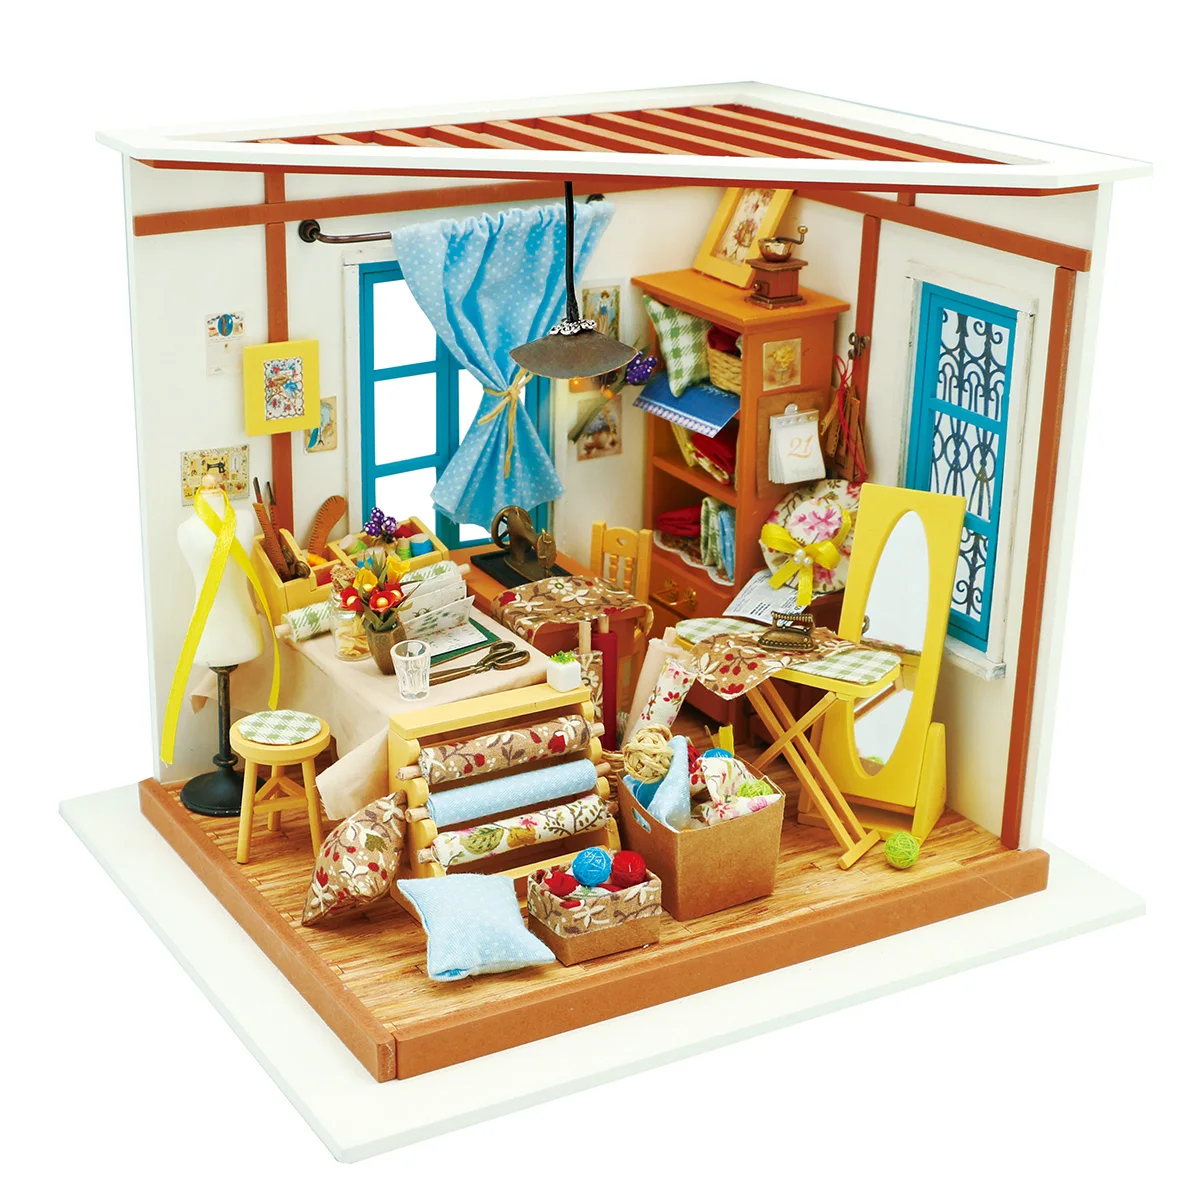 

Robotime DG101 Lisa's Tailor DIY miniature dollhouse diy wood puzzle house miniature diy kit for Dropshipping